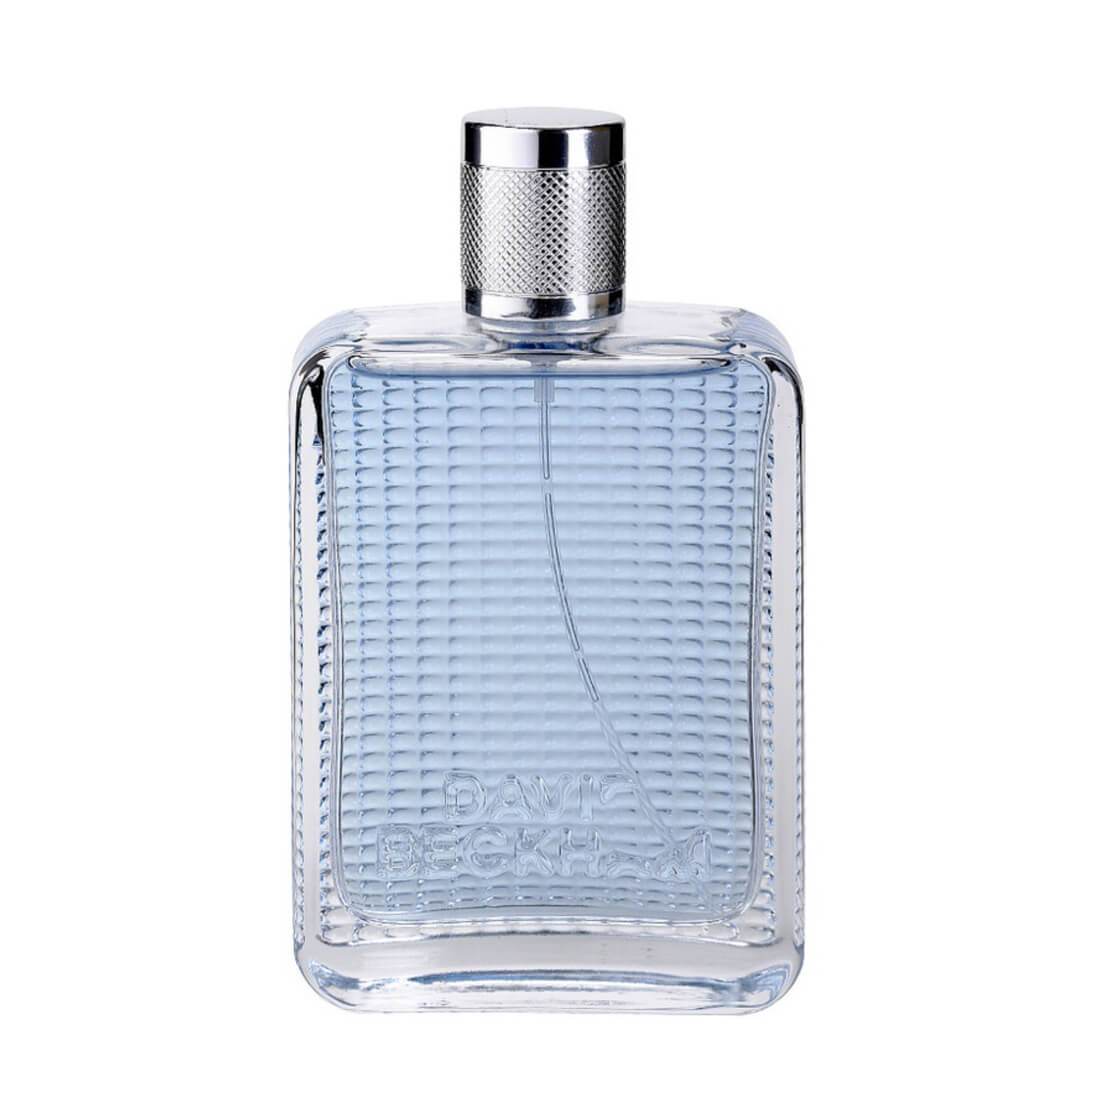 David Beckham The Essence Eau De Toilette Perfume For Men 75ml – Just Attar